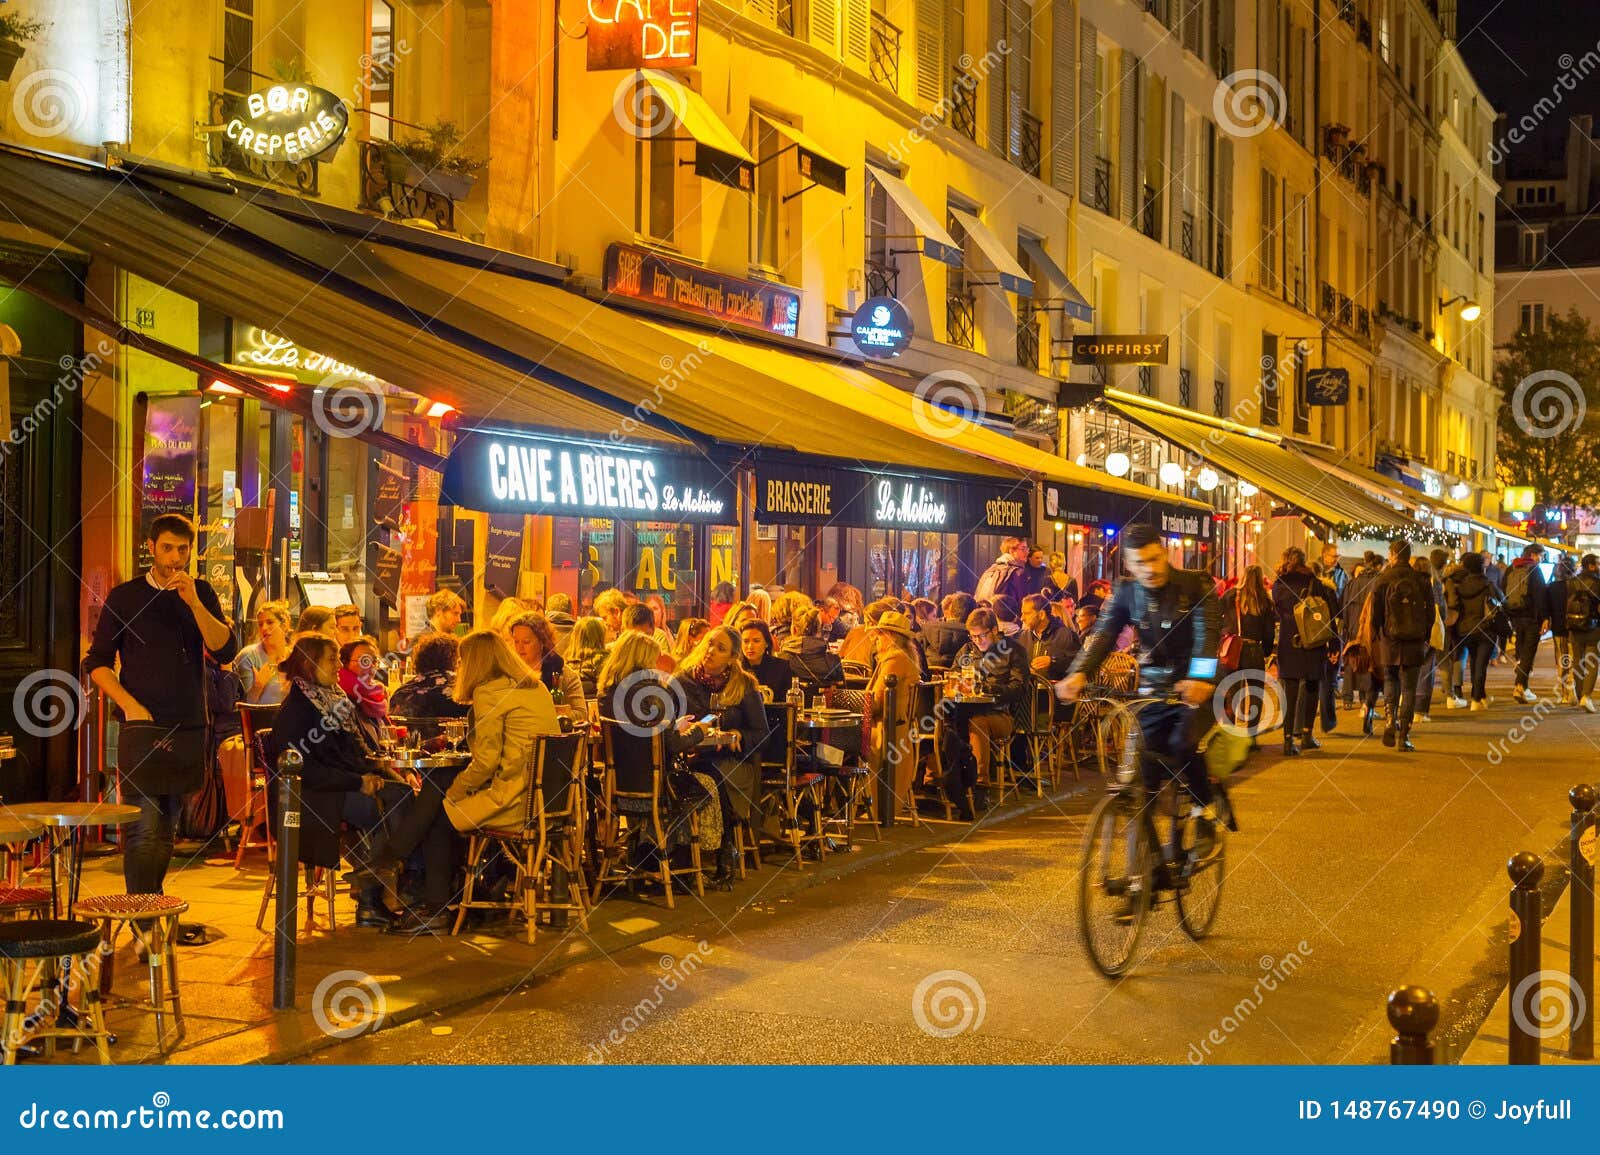 People Street Restaurant Paris Night Editorial Image - Image of ...